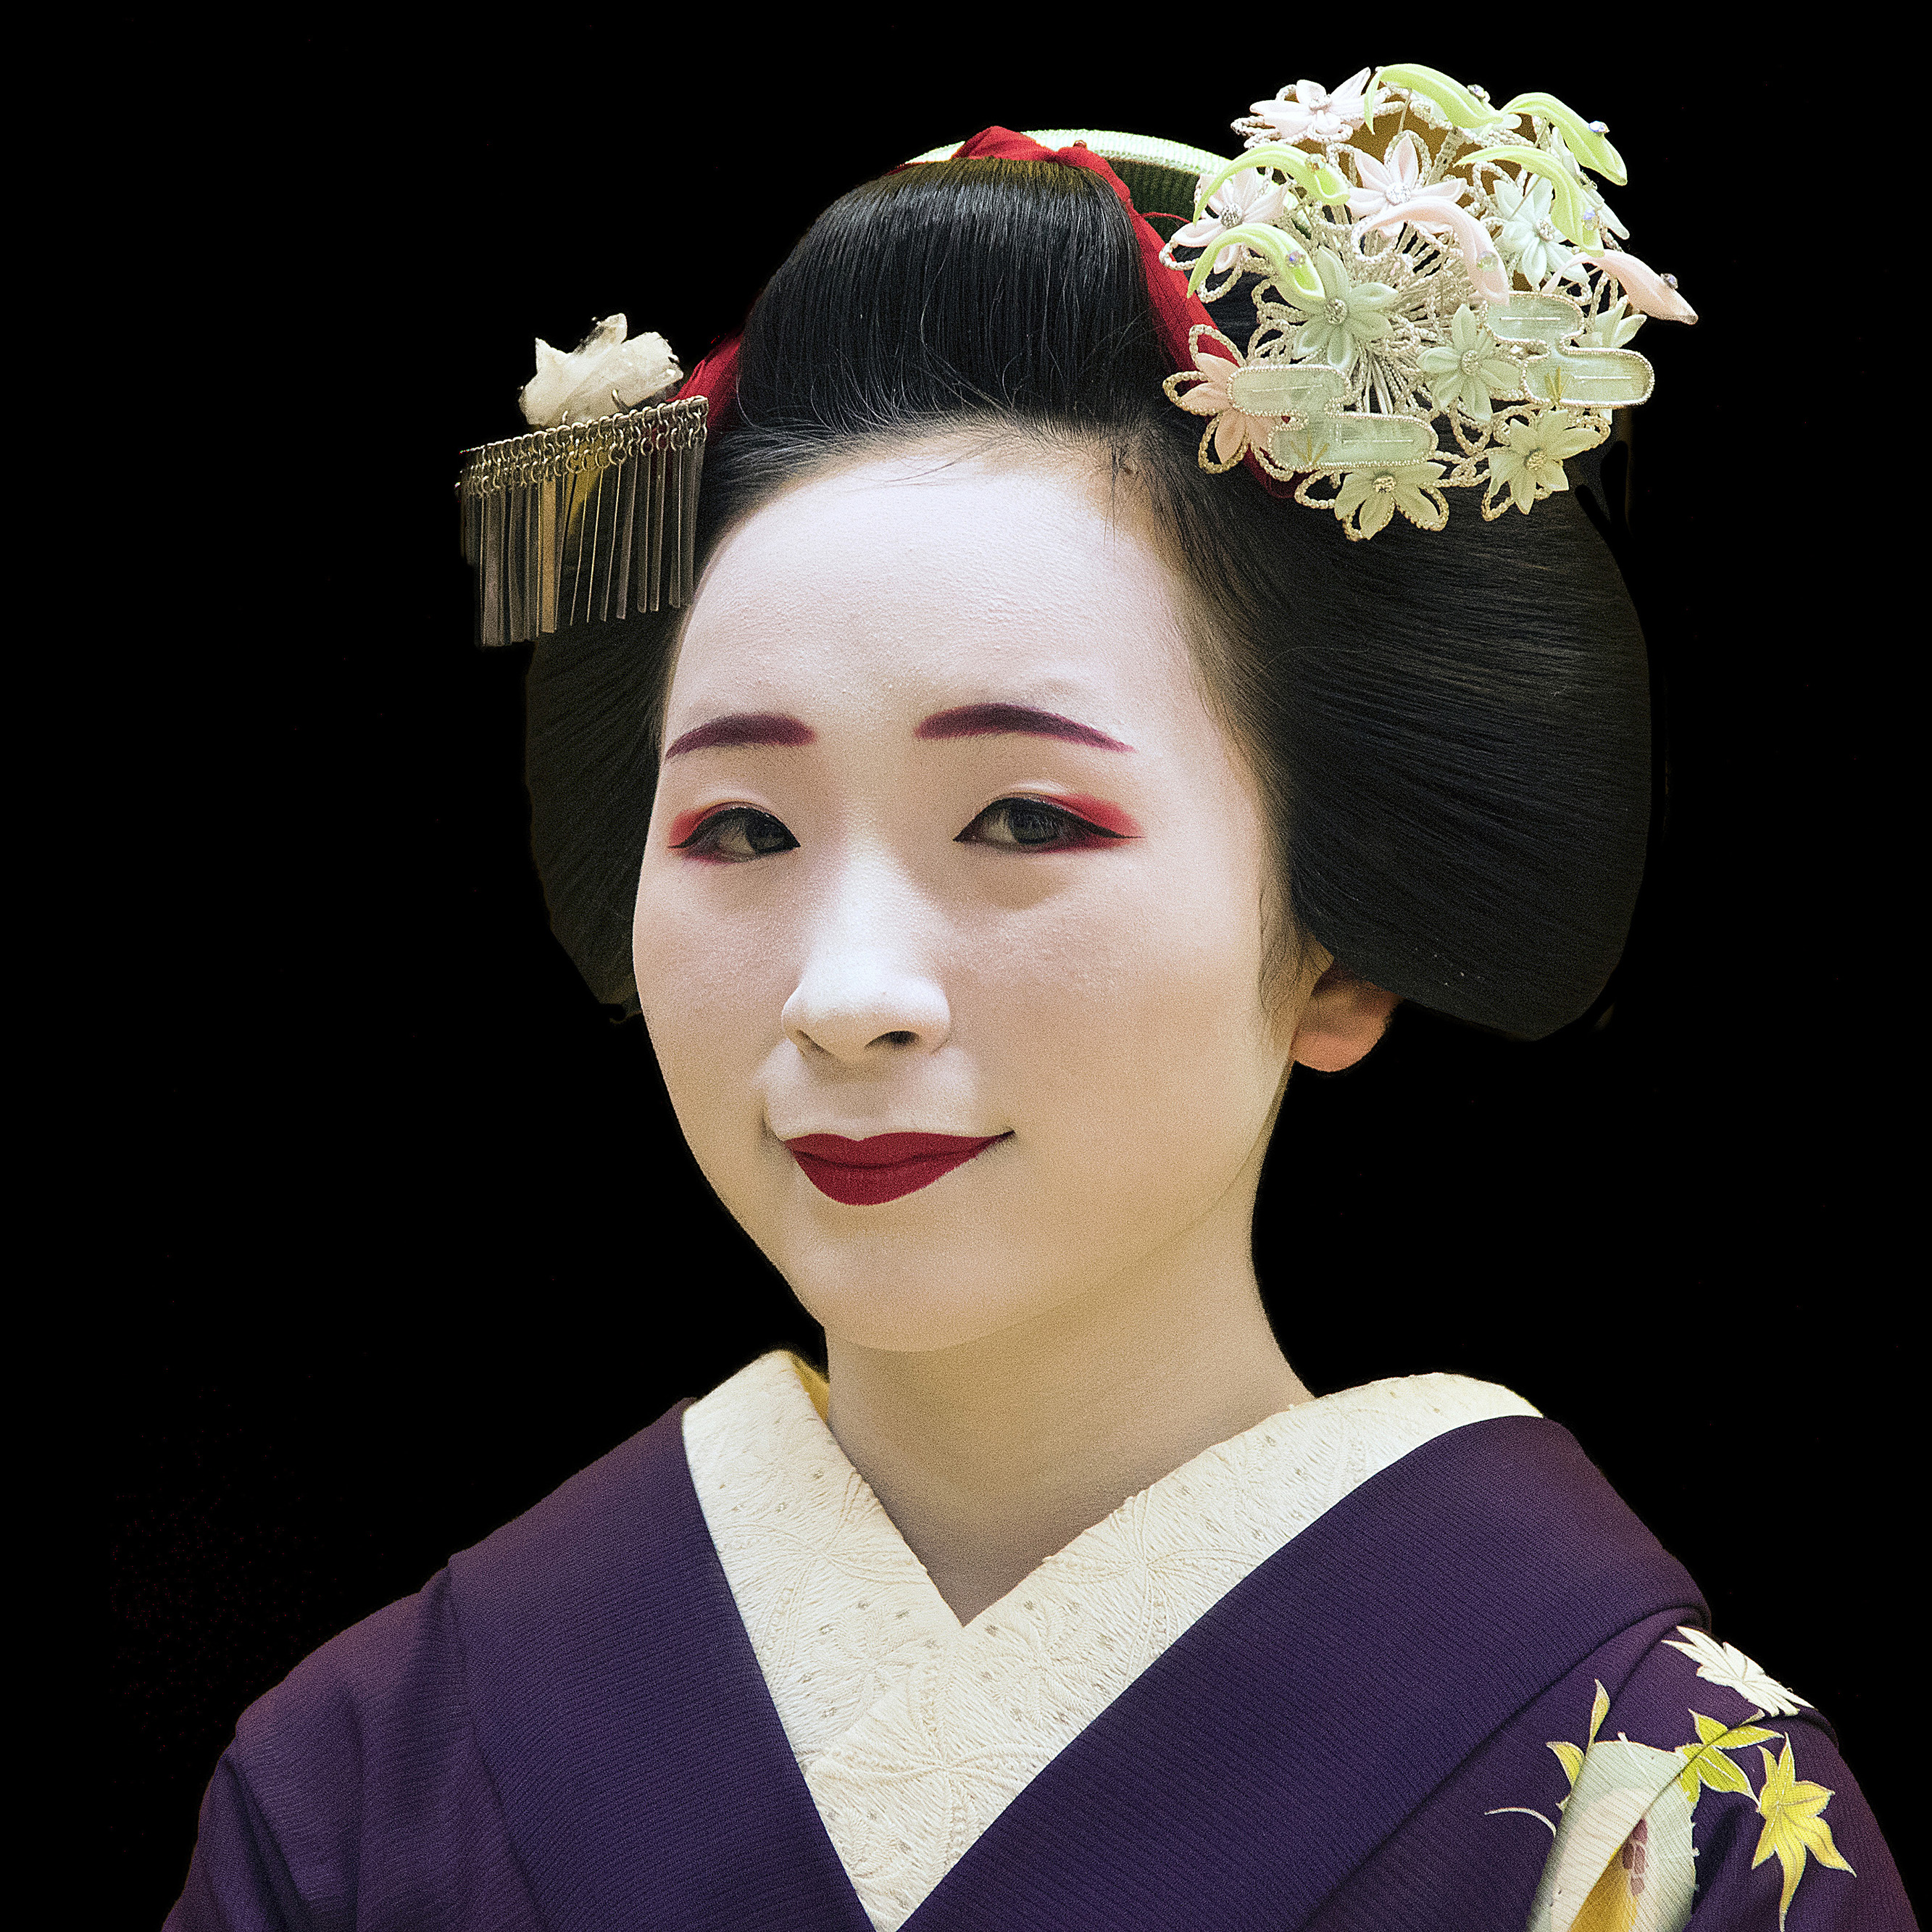 Maiko (geisha apprentice), Kyoto (Japan), 2018